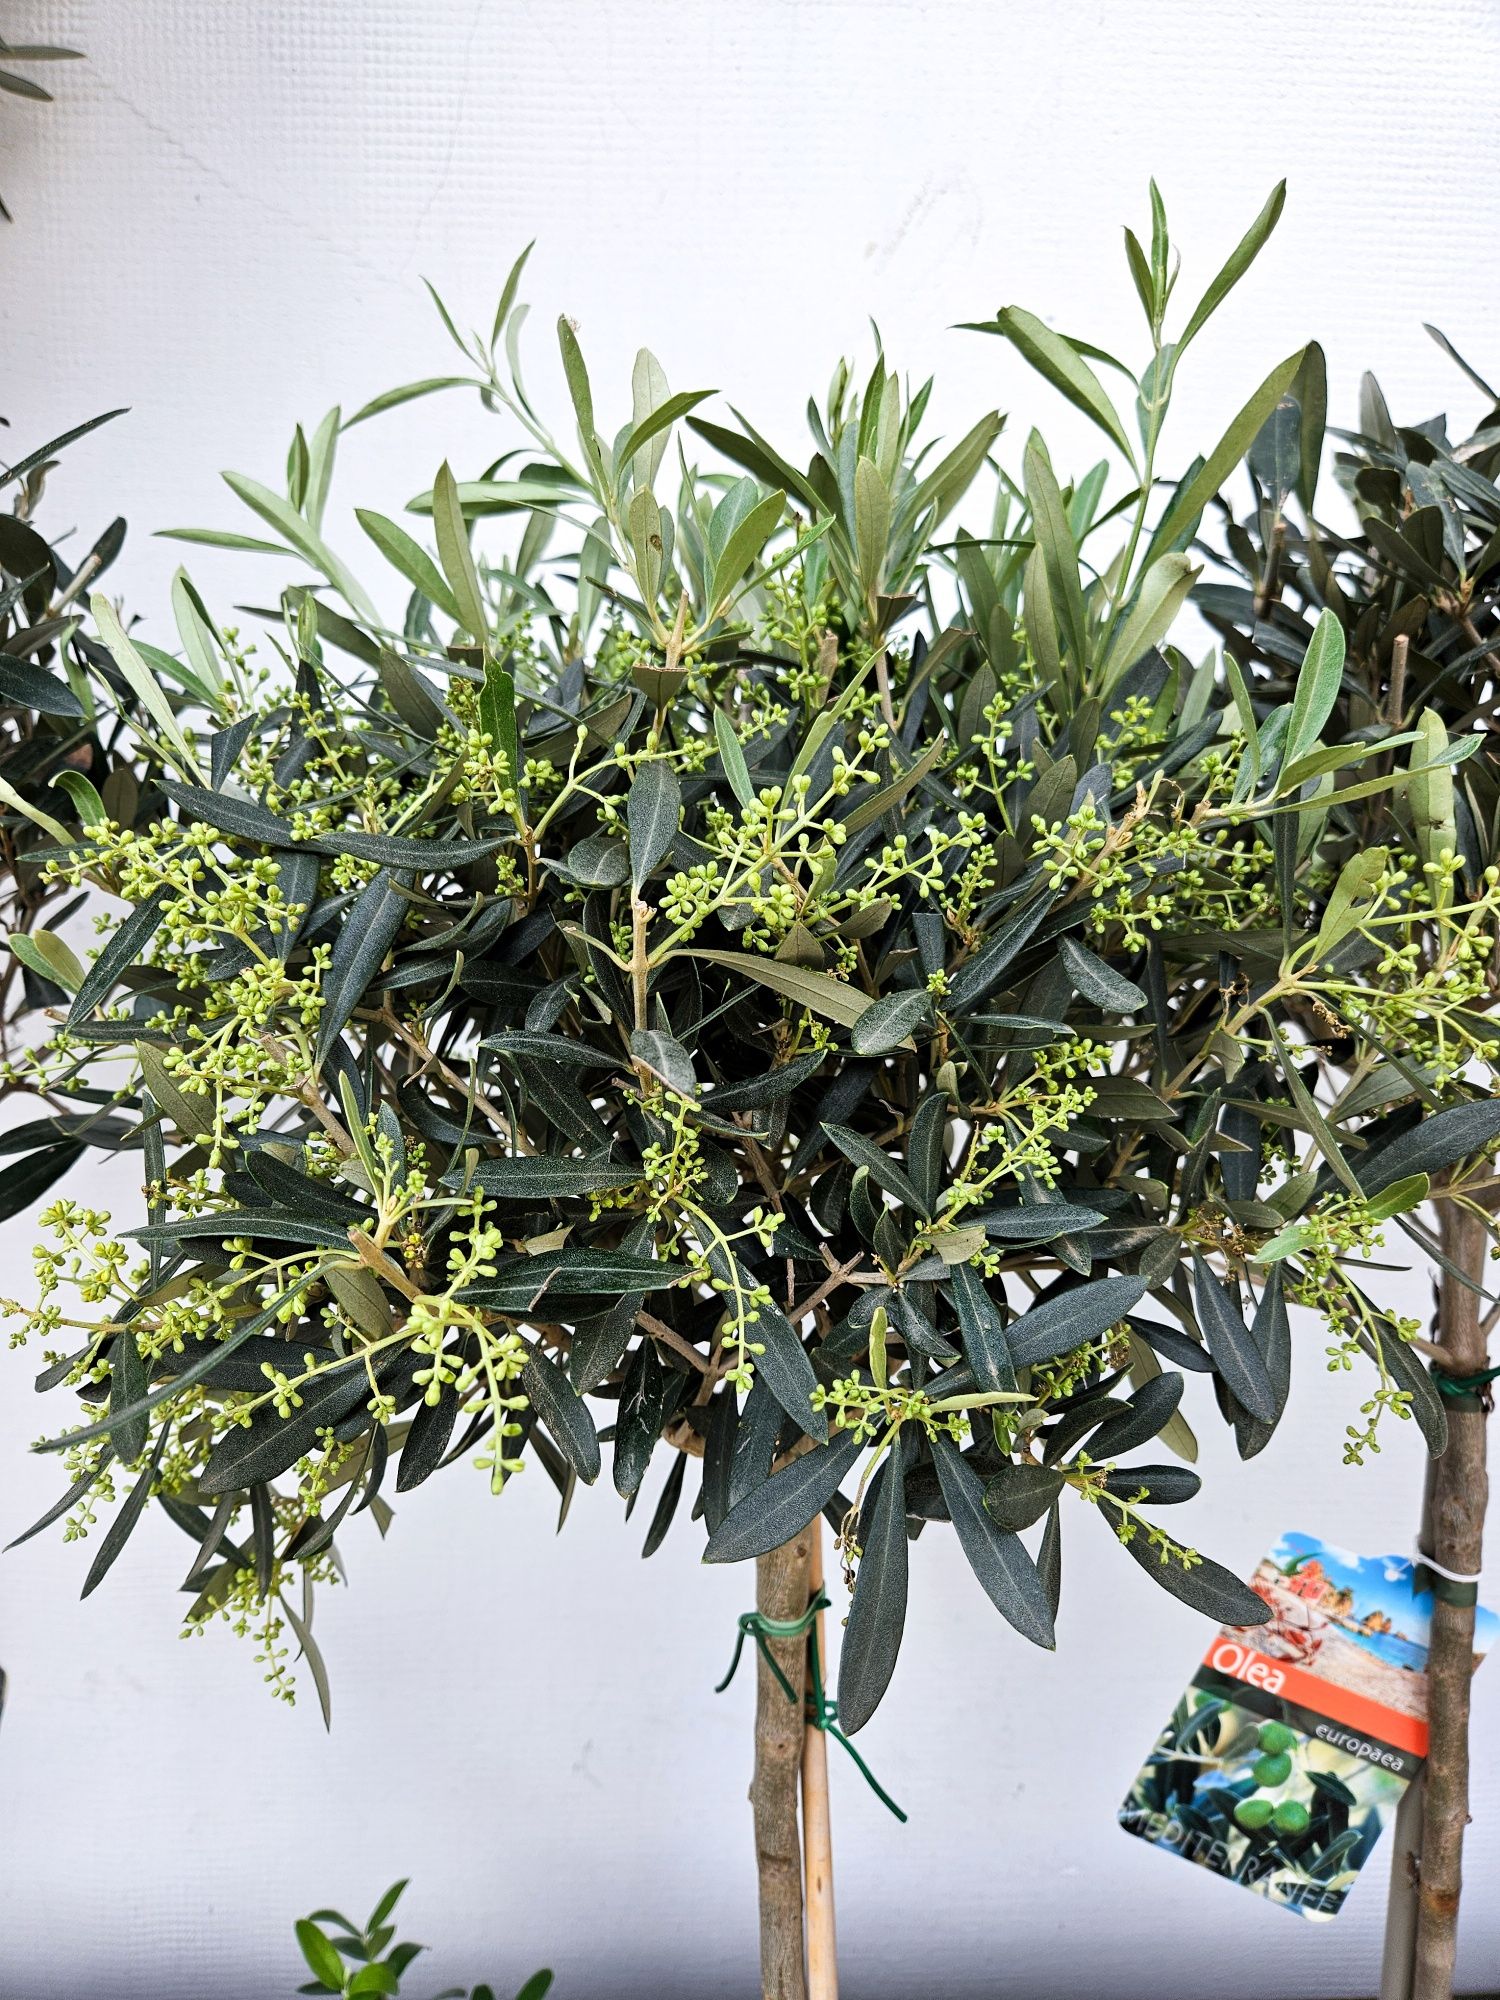 NOWA DOSTAWA - Drzewka oliwne / oliwka europejska